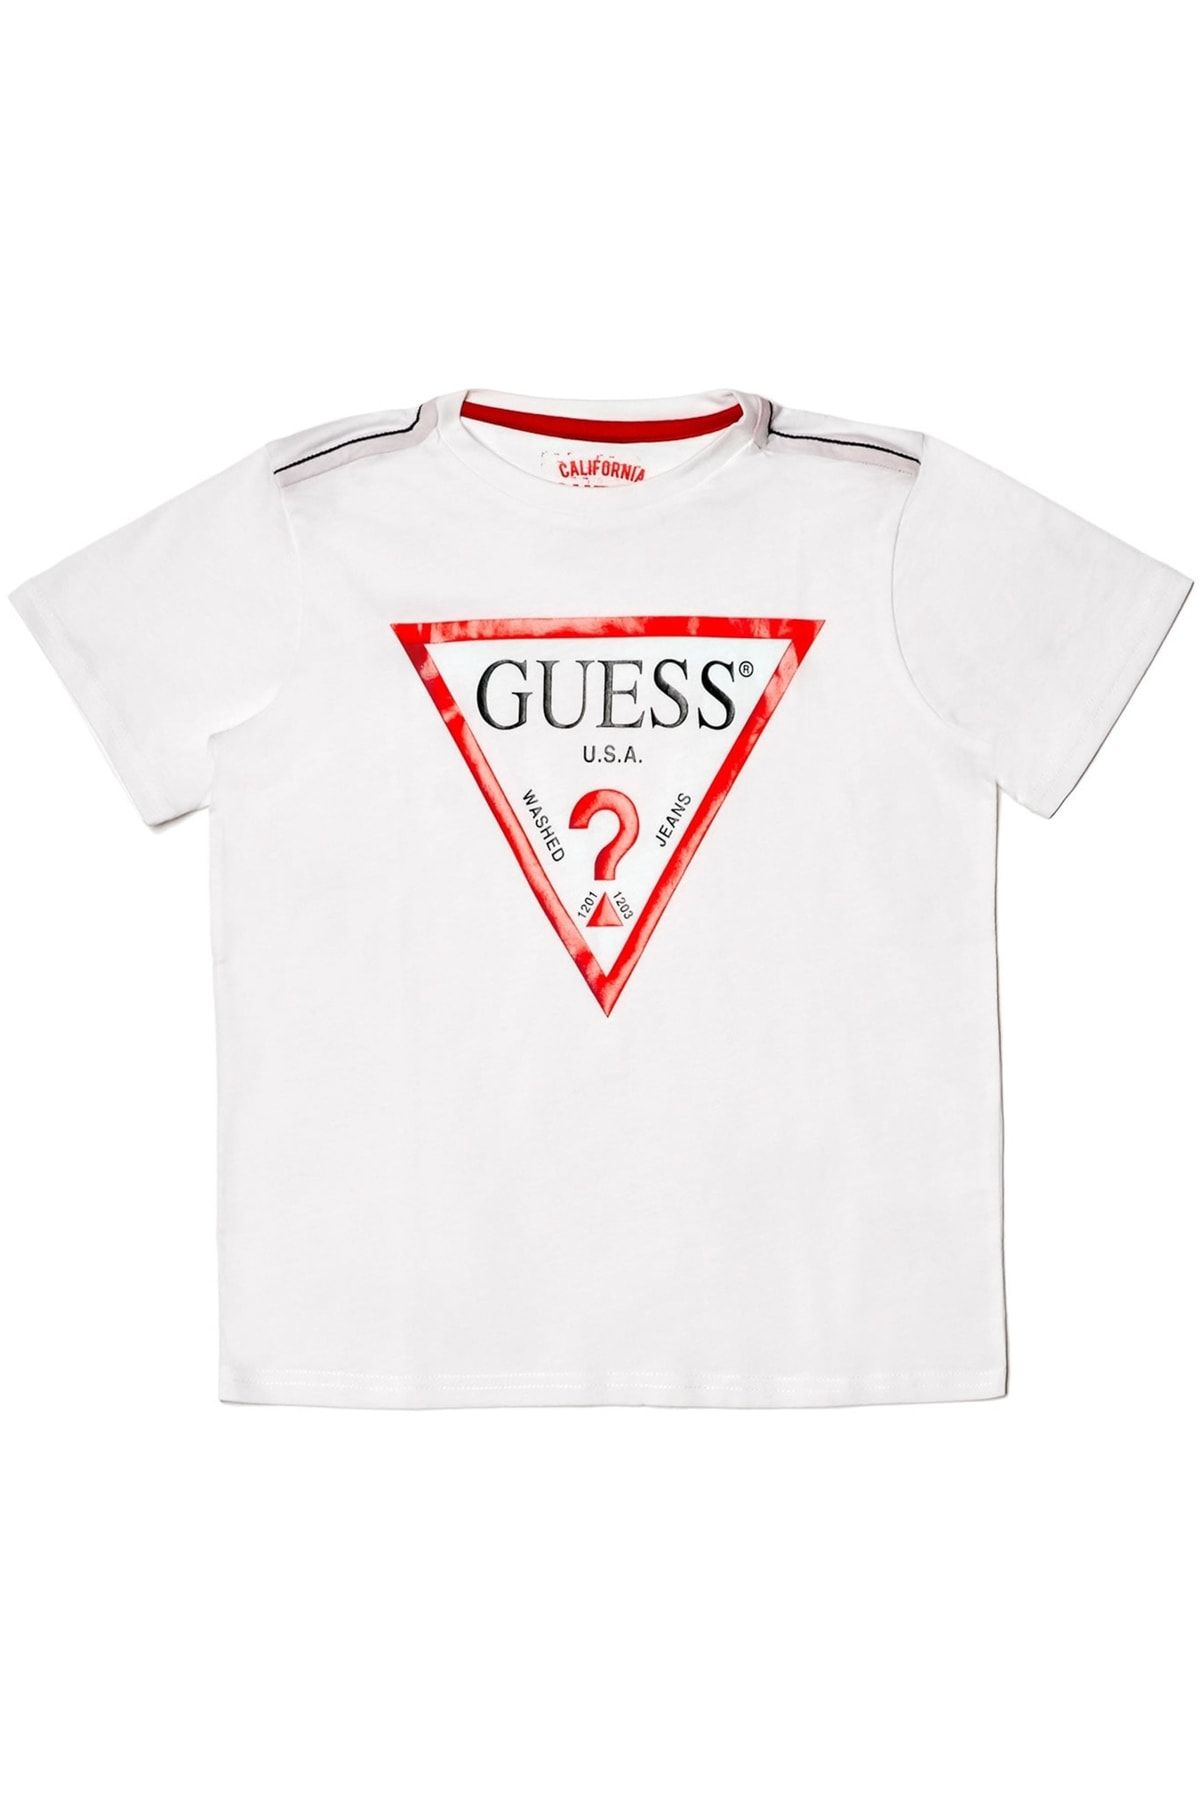 Guess Bg Store Erkek Çocuk T-shirt 23pssgl3ı55